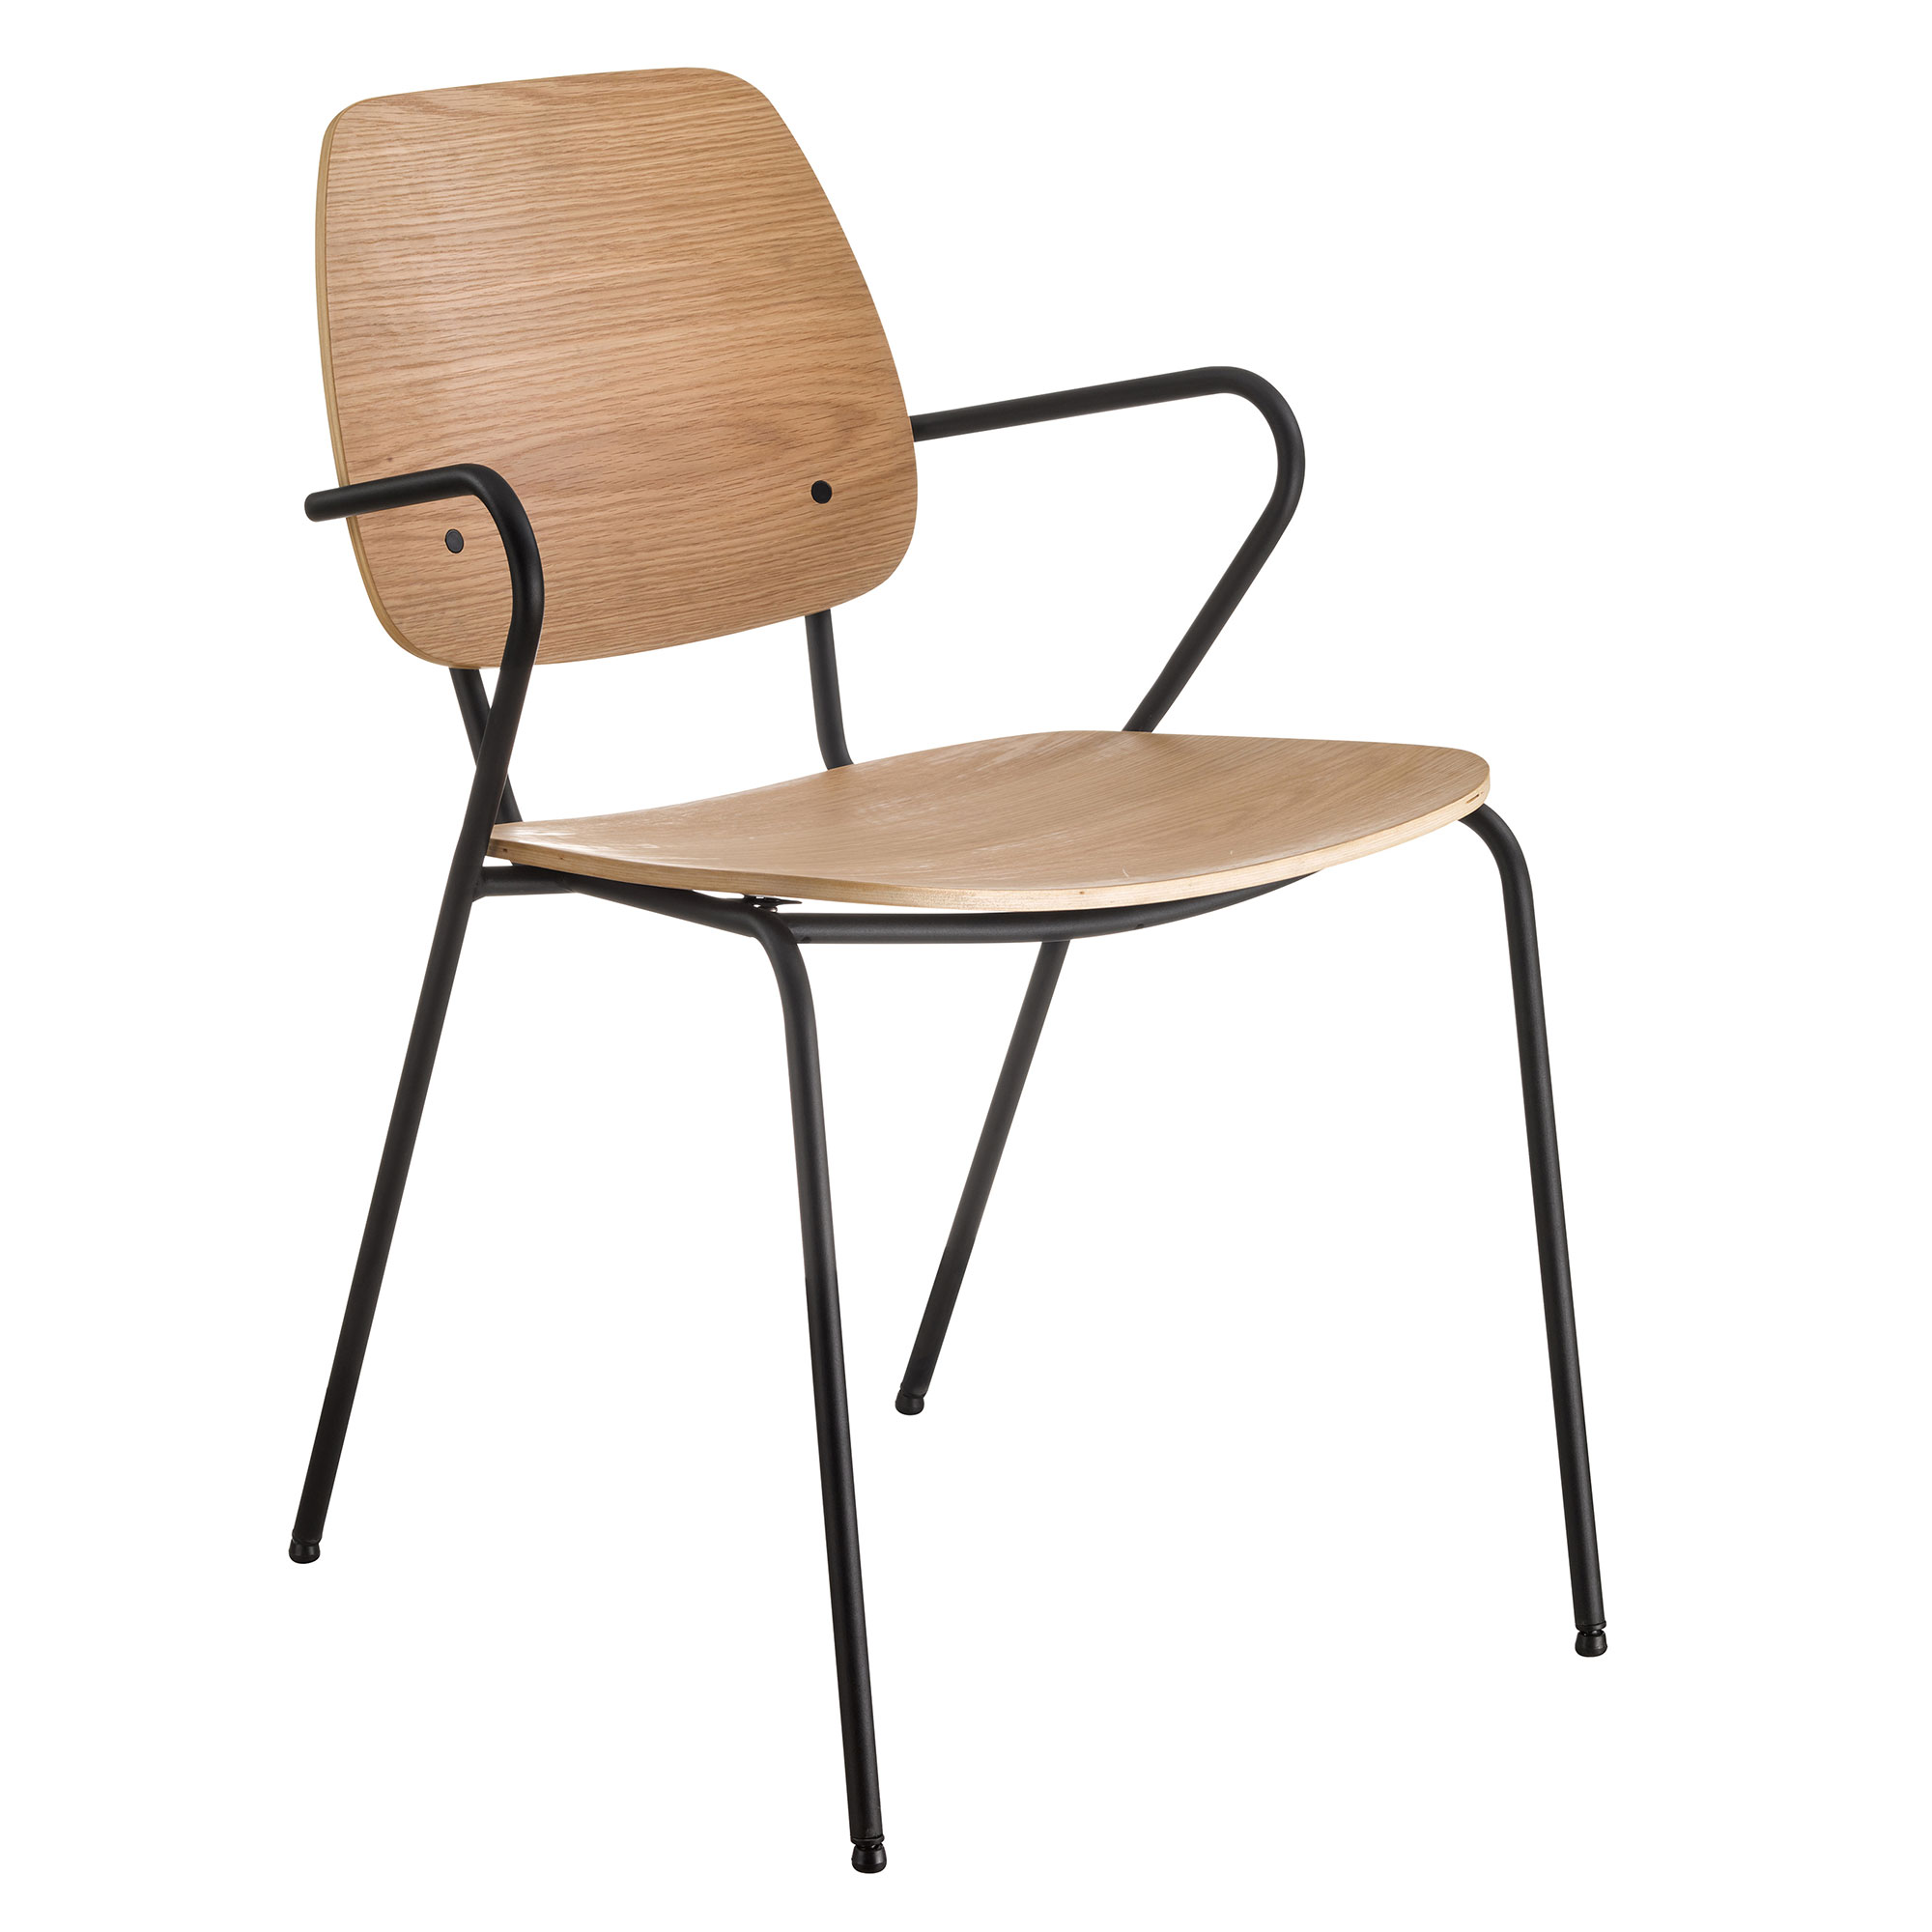 Queen B dining chair (2pcs set) | CaDot Design by Leeke